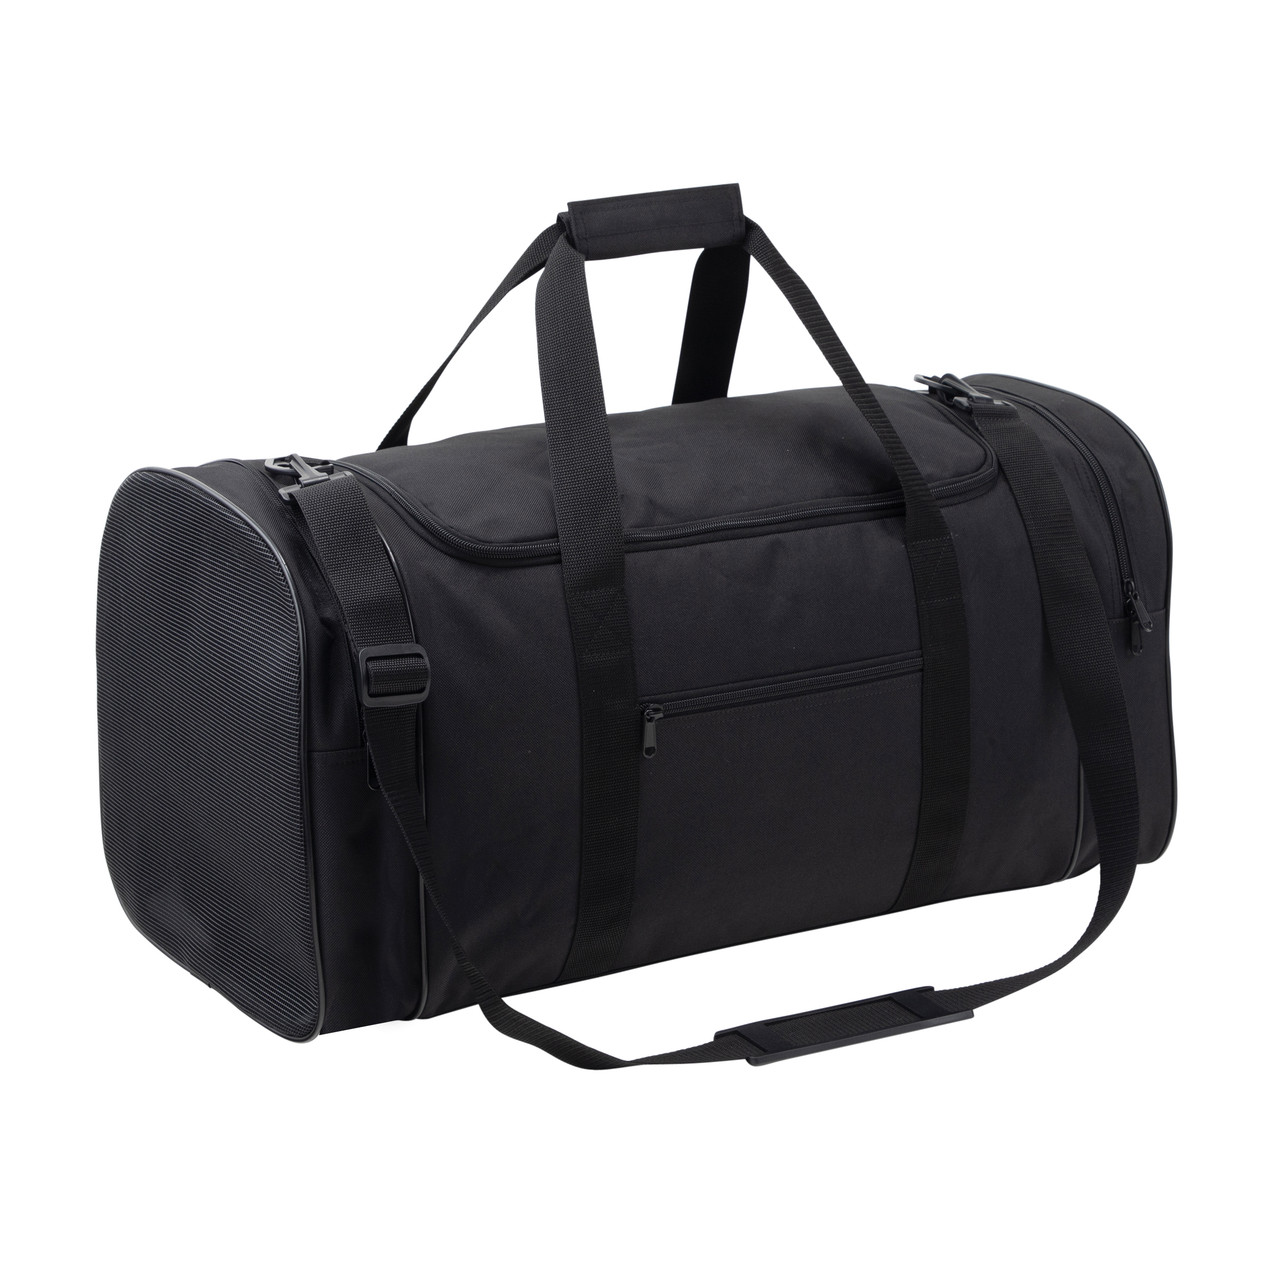 Premium PSD | Gym duffle bag logo mockup psd mockups black travel bag